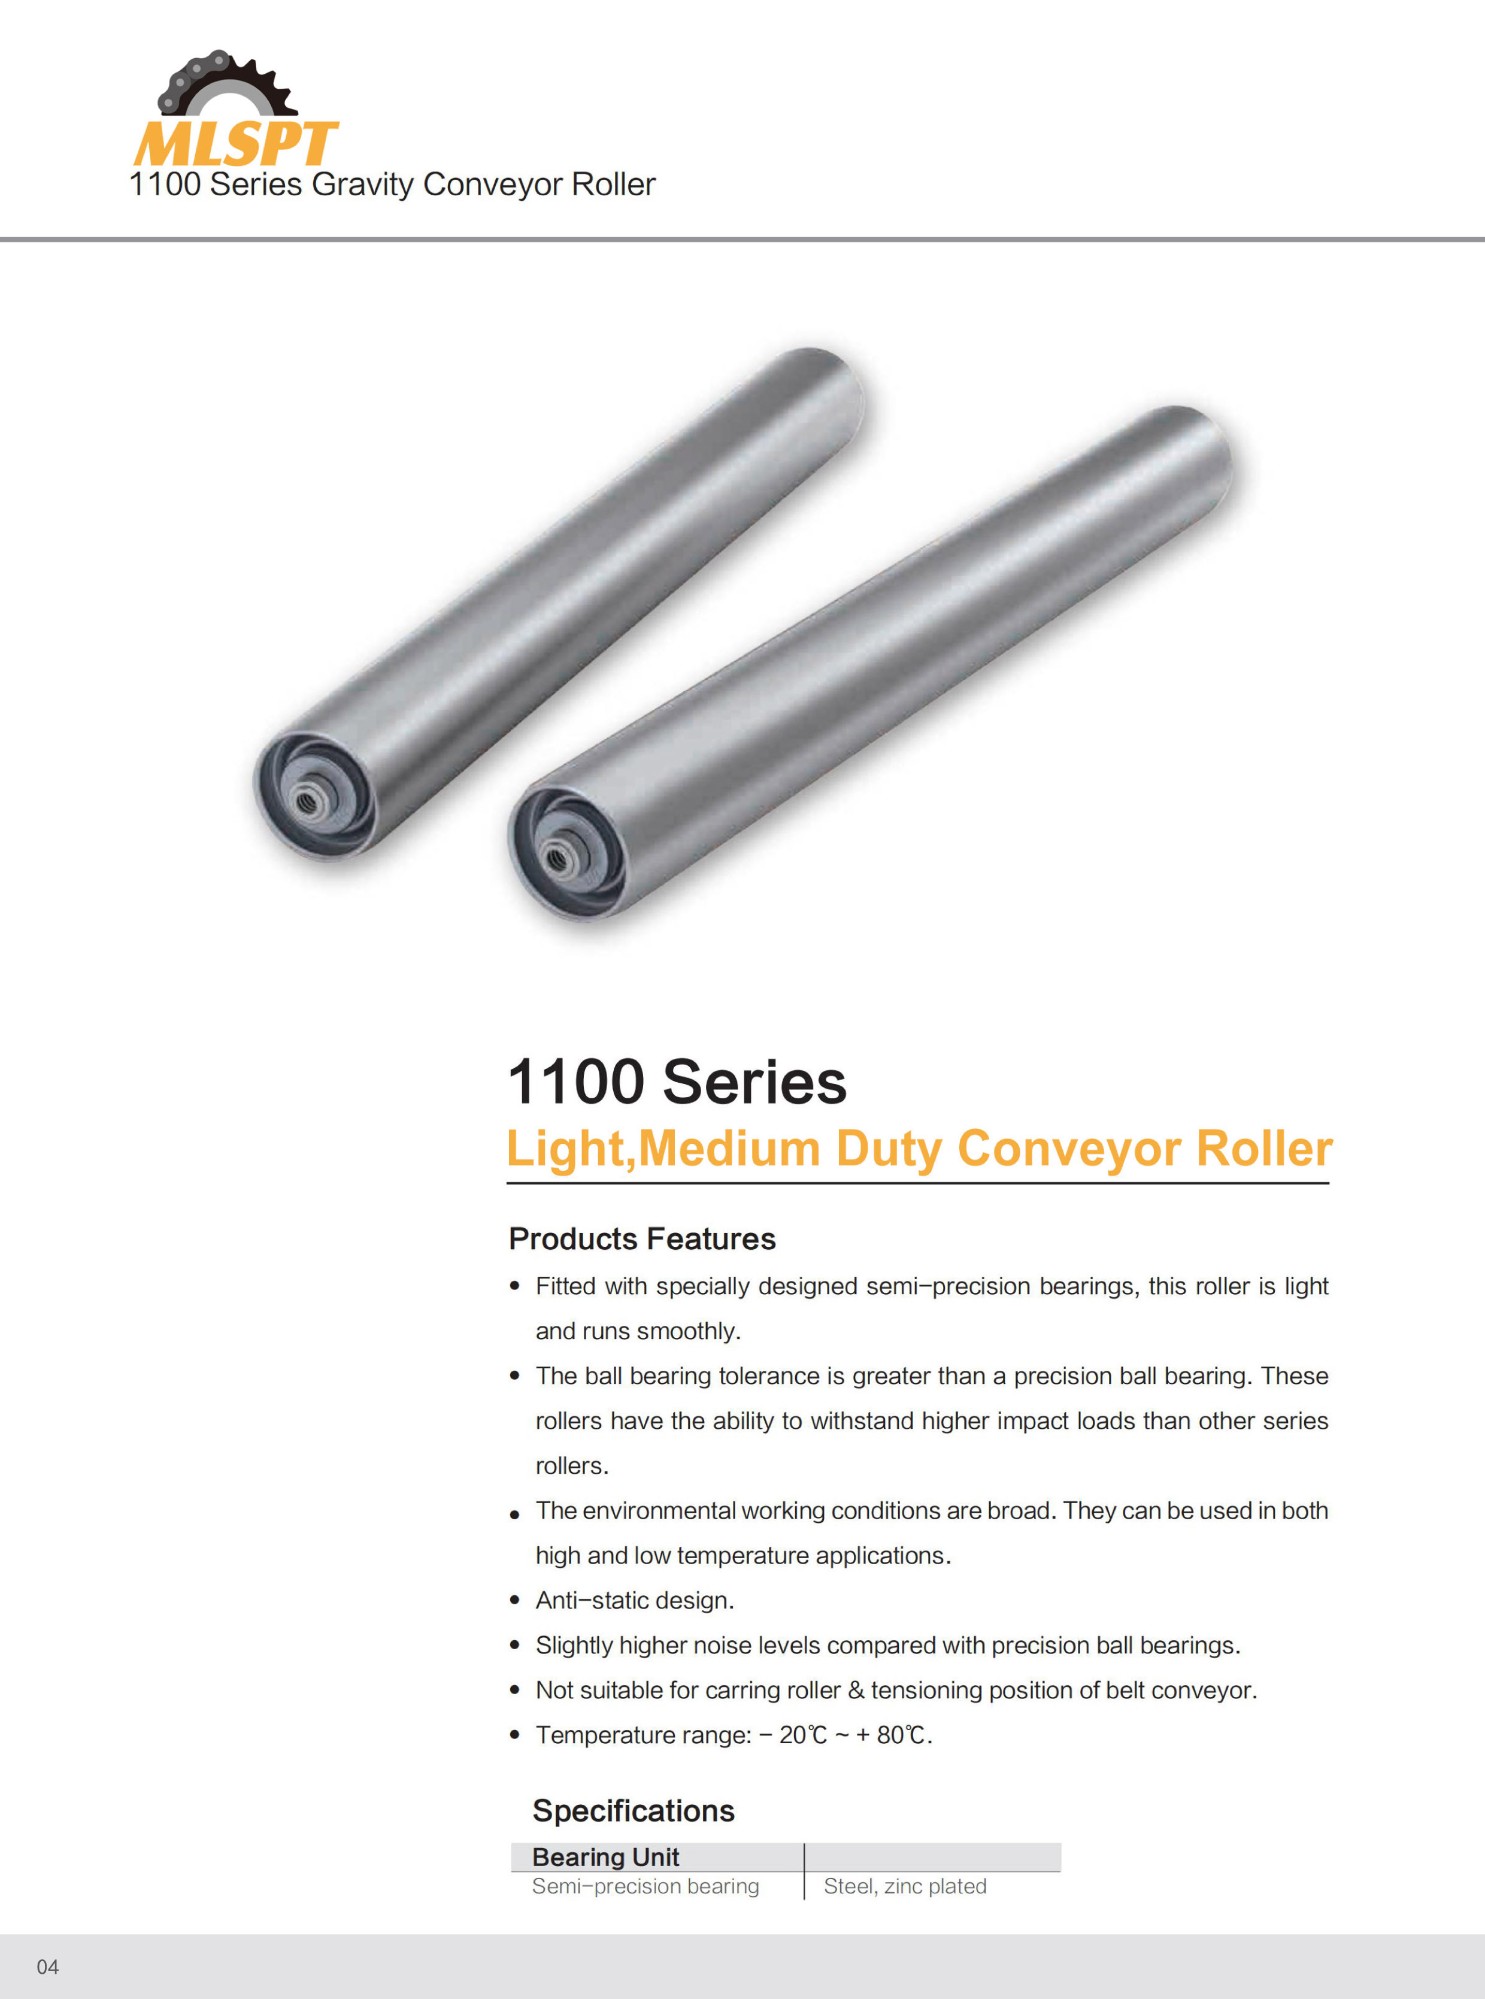 1100 series gravity conveyor roller